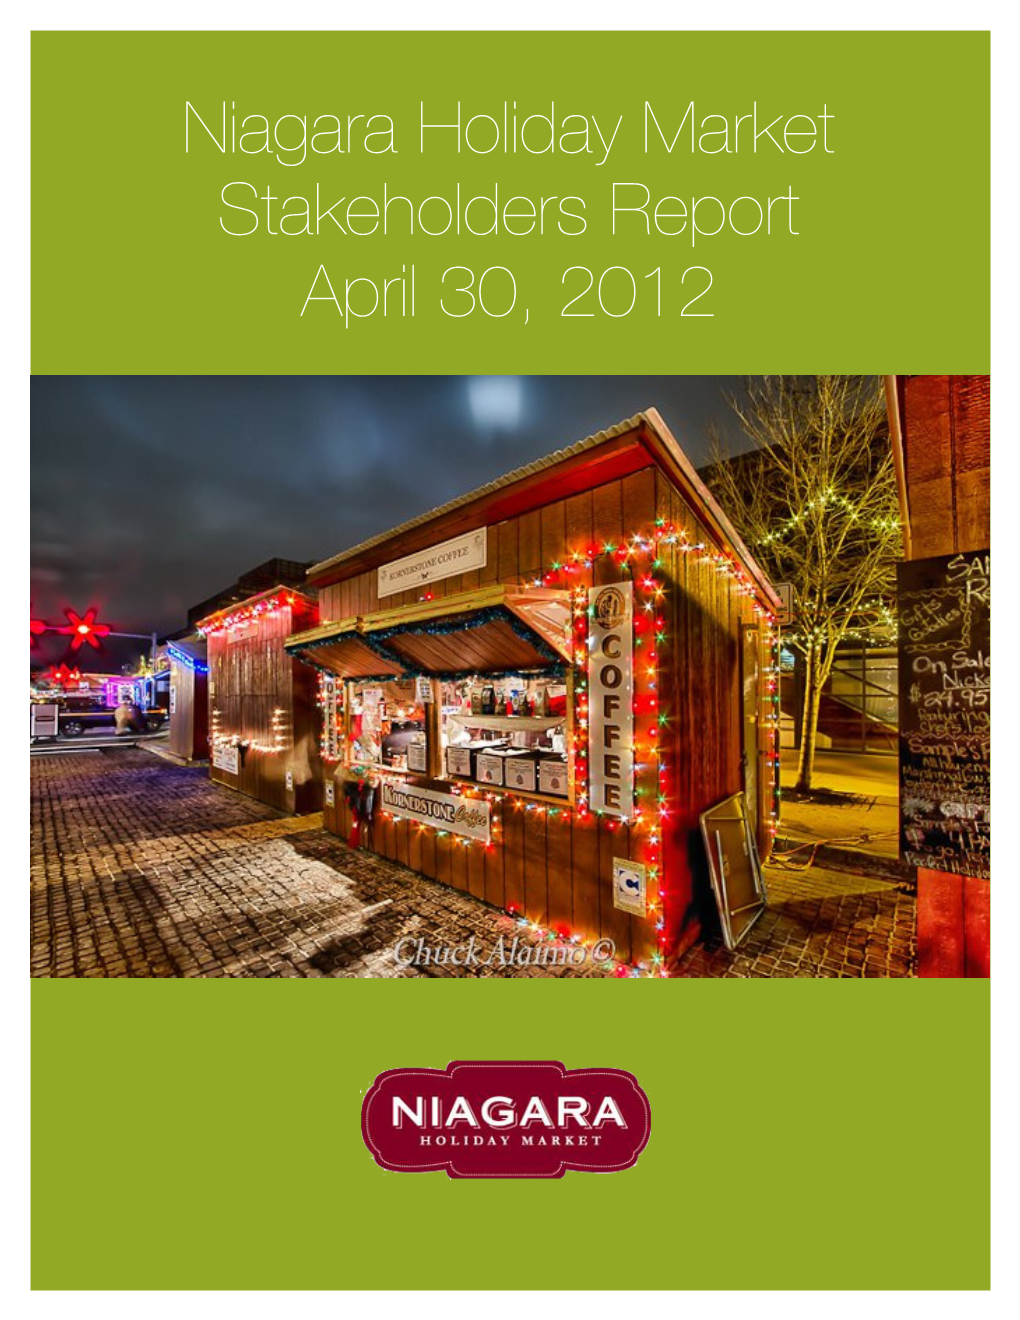 Niagara Holiday Market Stakeholders Report April 30, 2012 Part 1 the Niagara Holiday Market Report